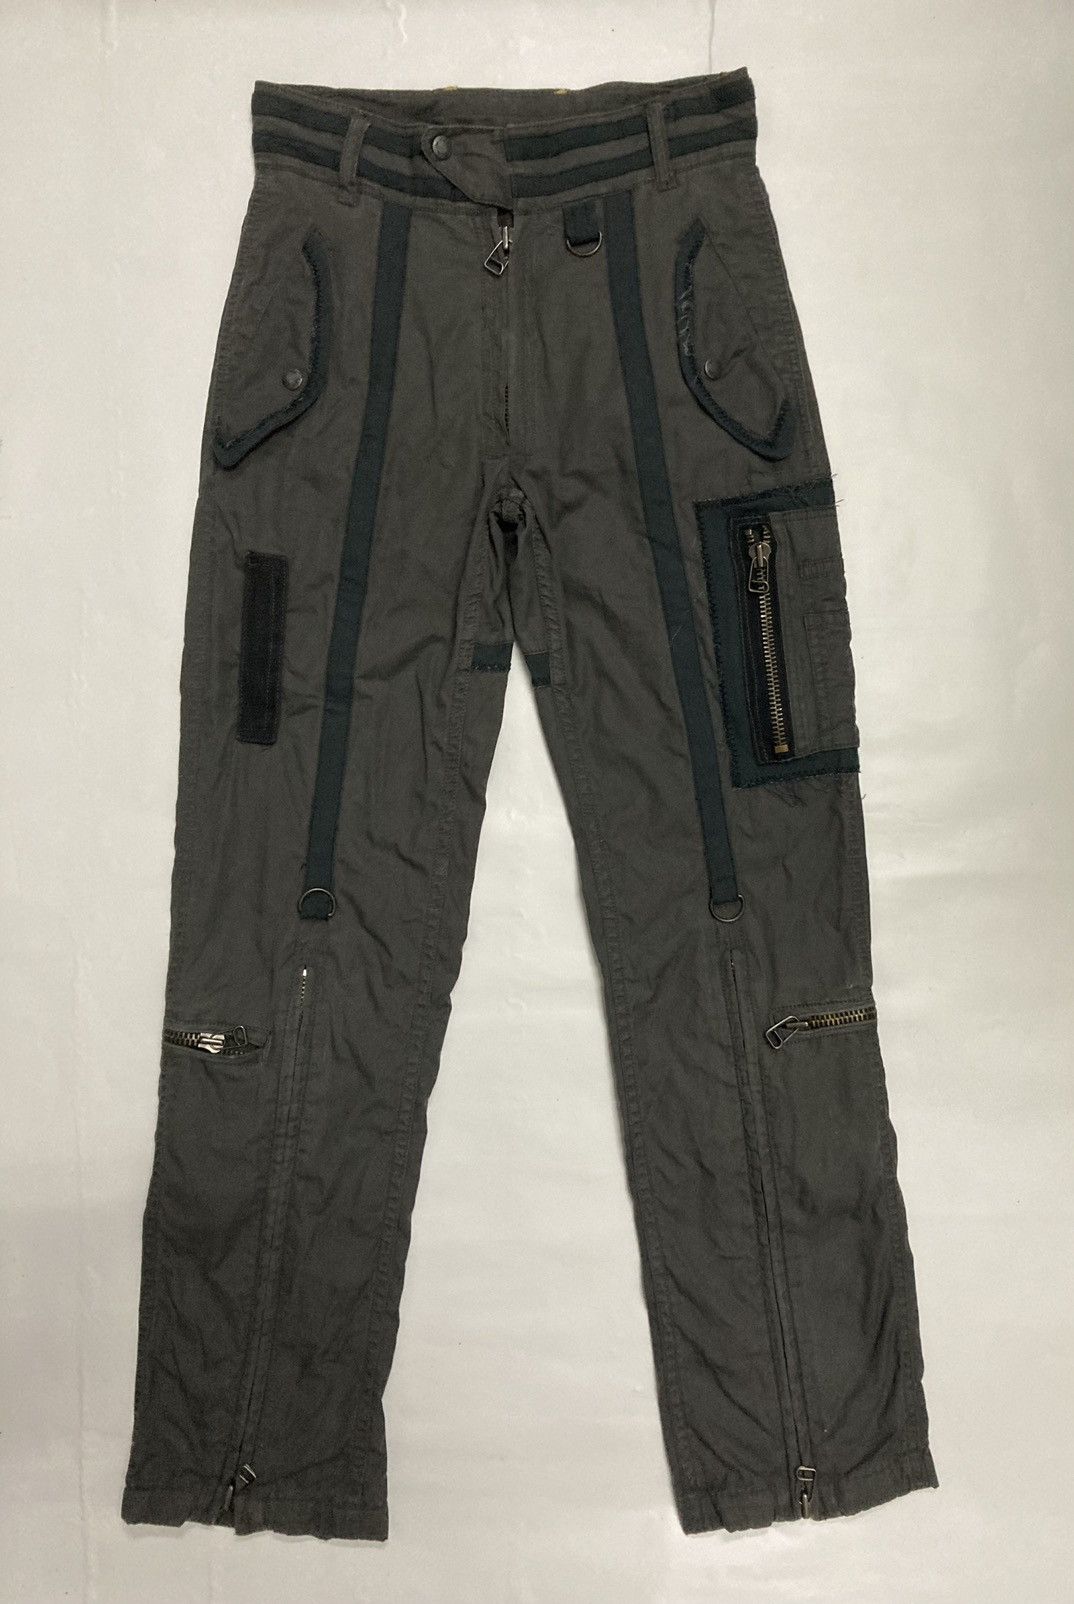 Avirex Air Force Reserve Bondage Pants - 1